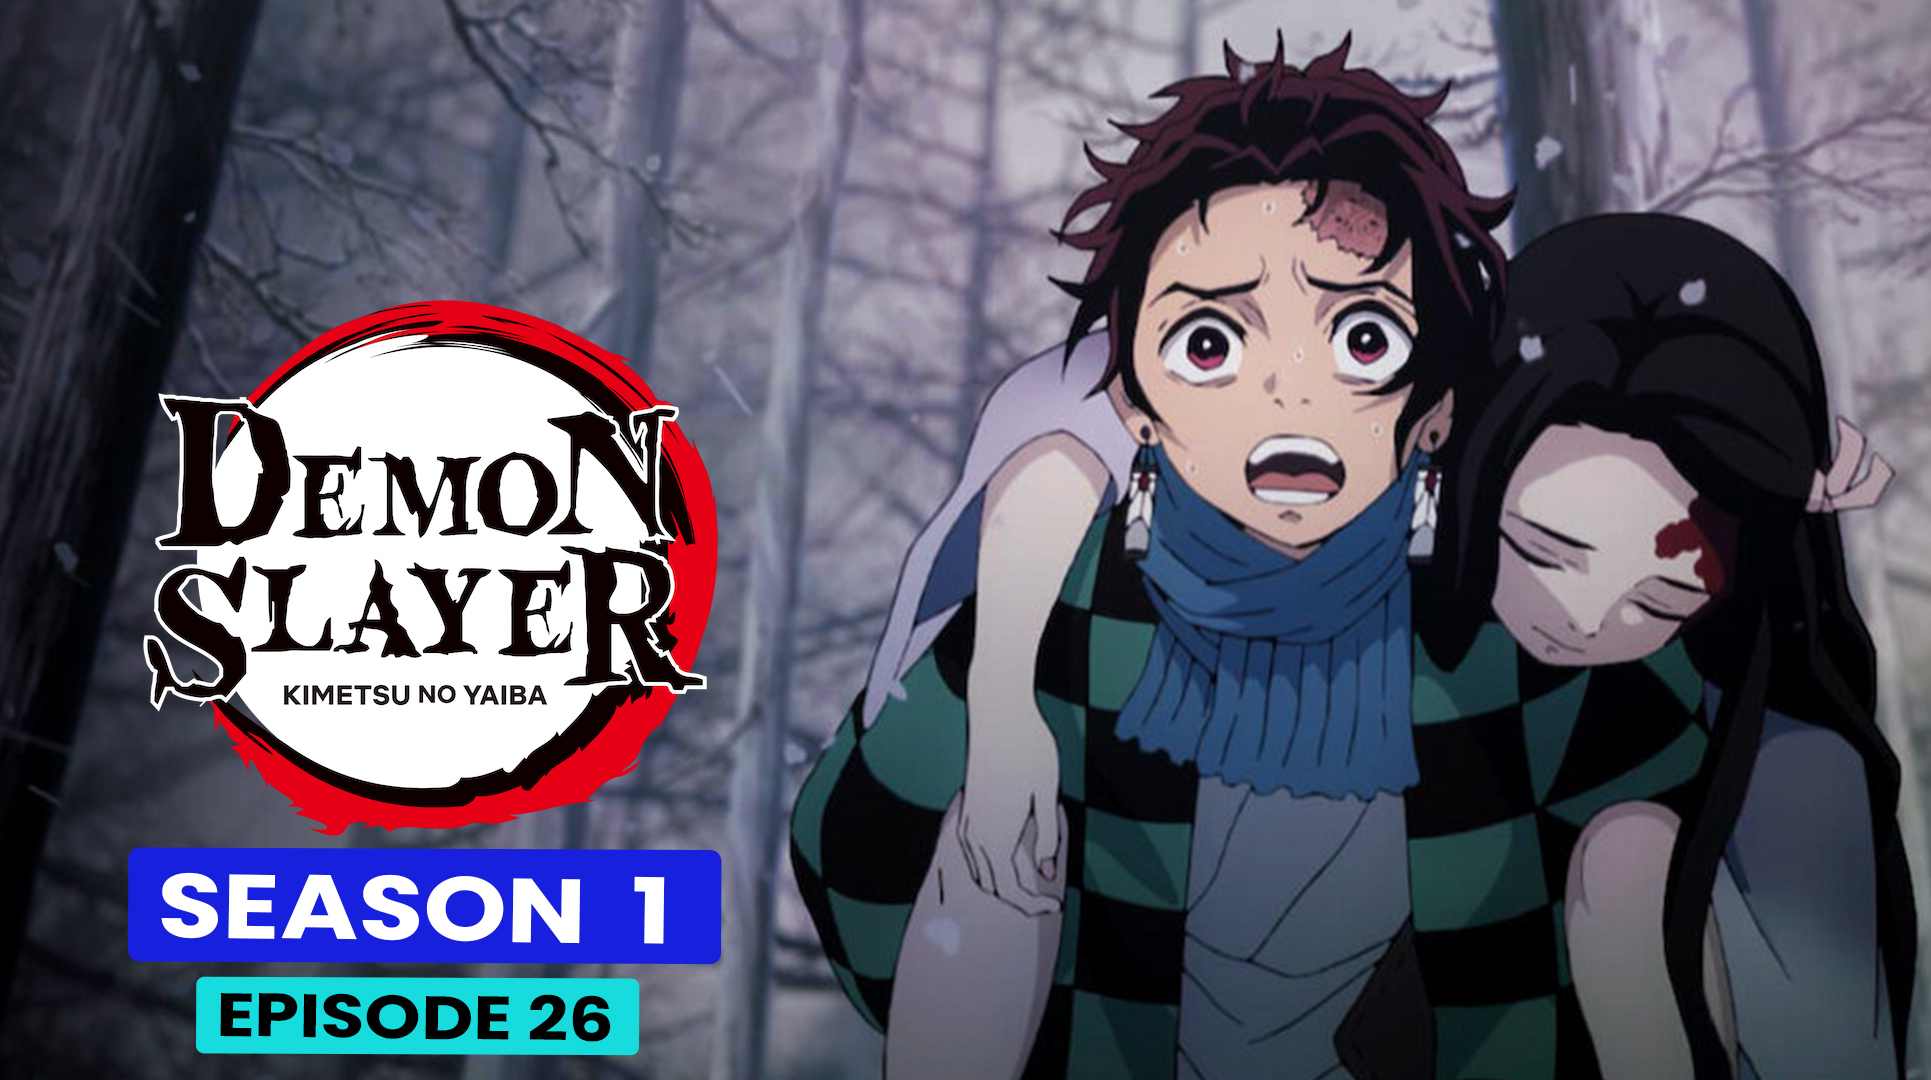 Demon Slayer: Kimetsu no Yaiba Seasons 1 Episode 26 On Netflix Australia? | Box Office Release